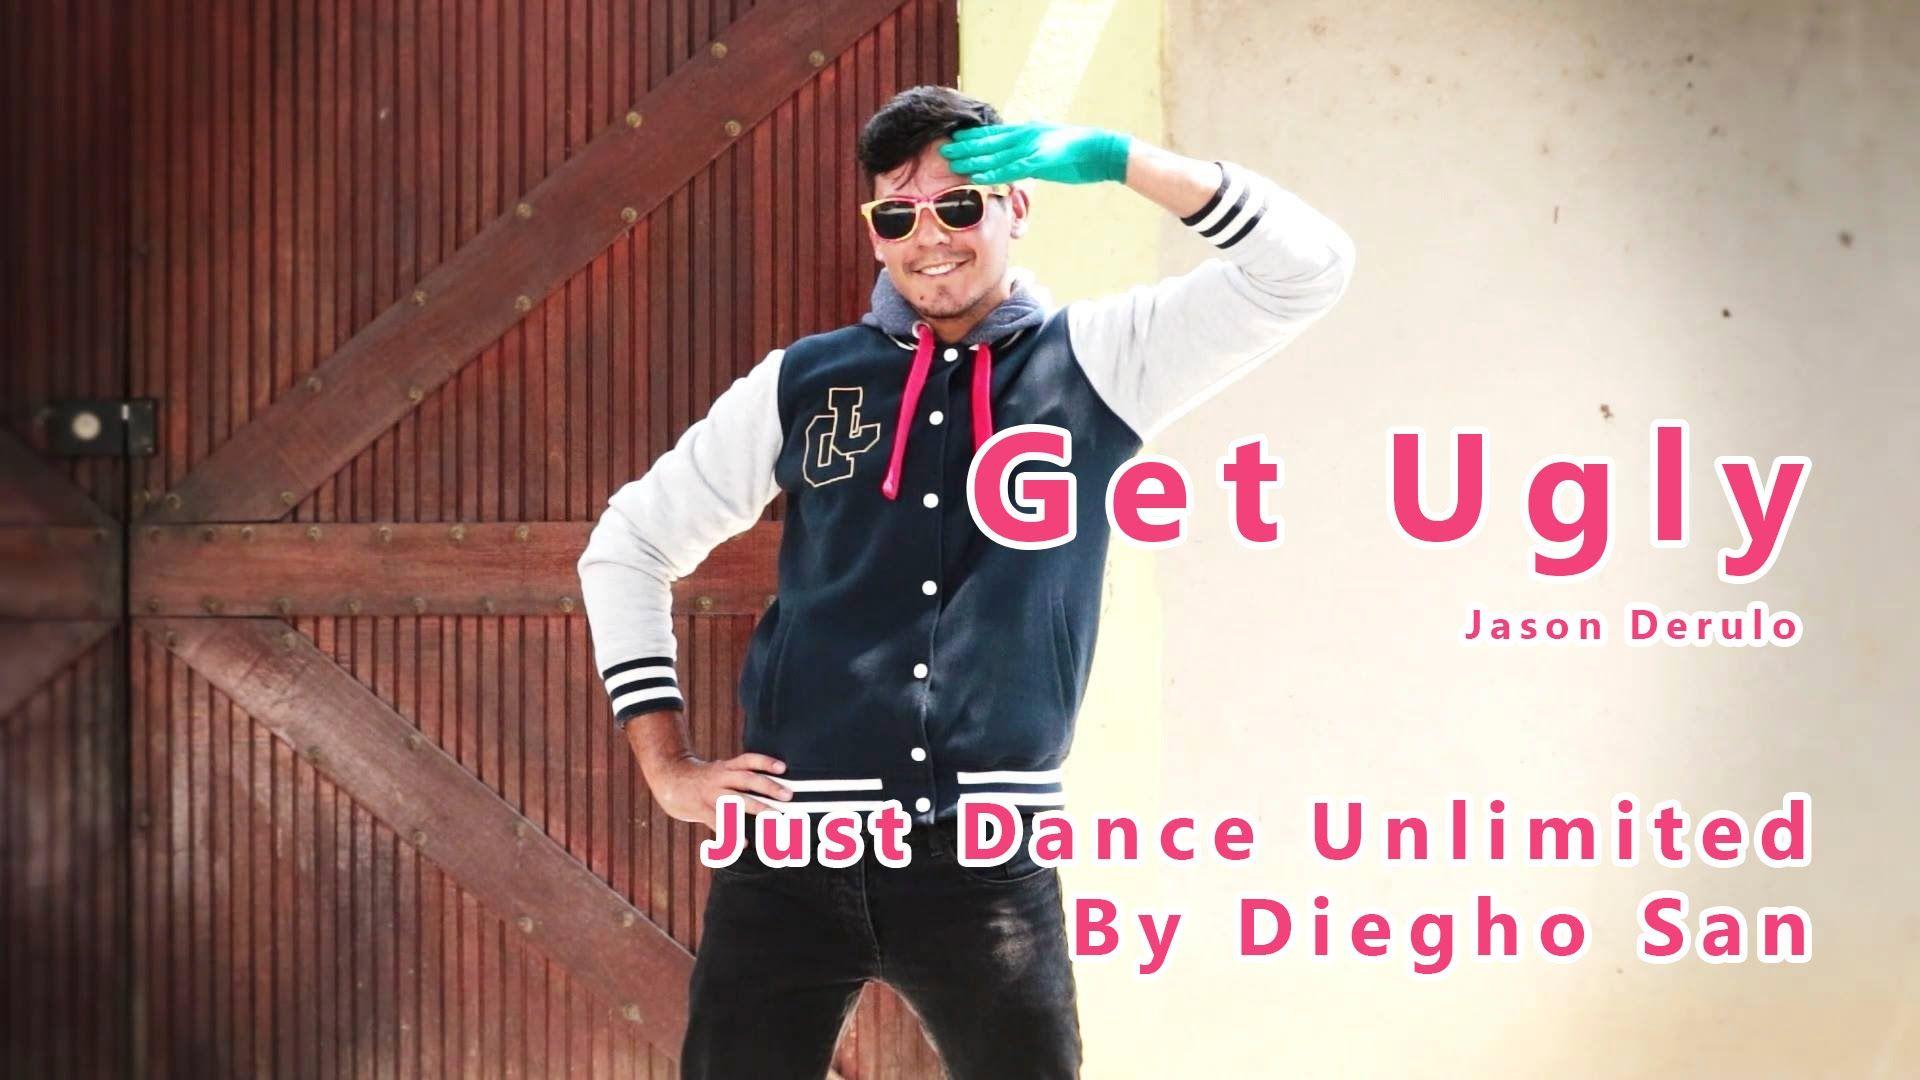 Get Ugly Derulo Dance Unlimited / Diegho San